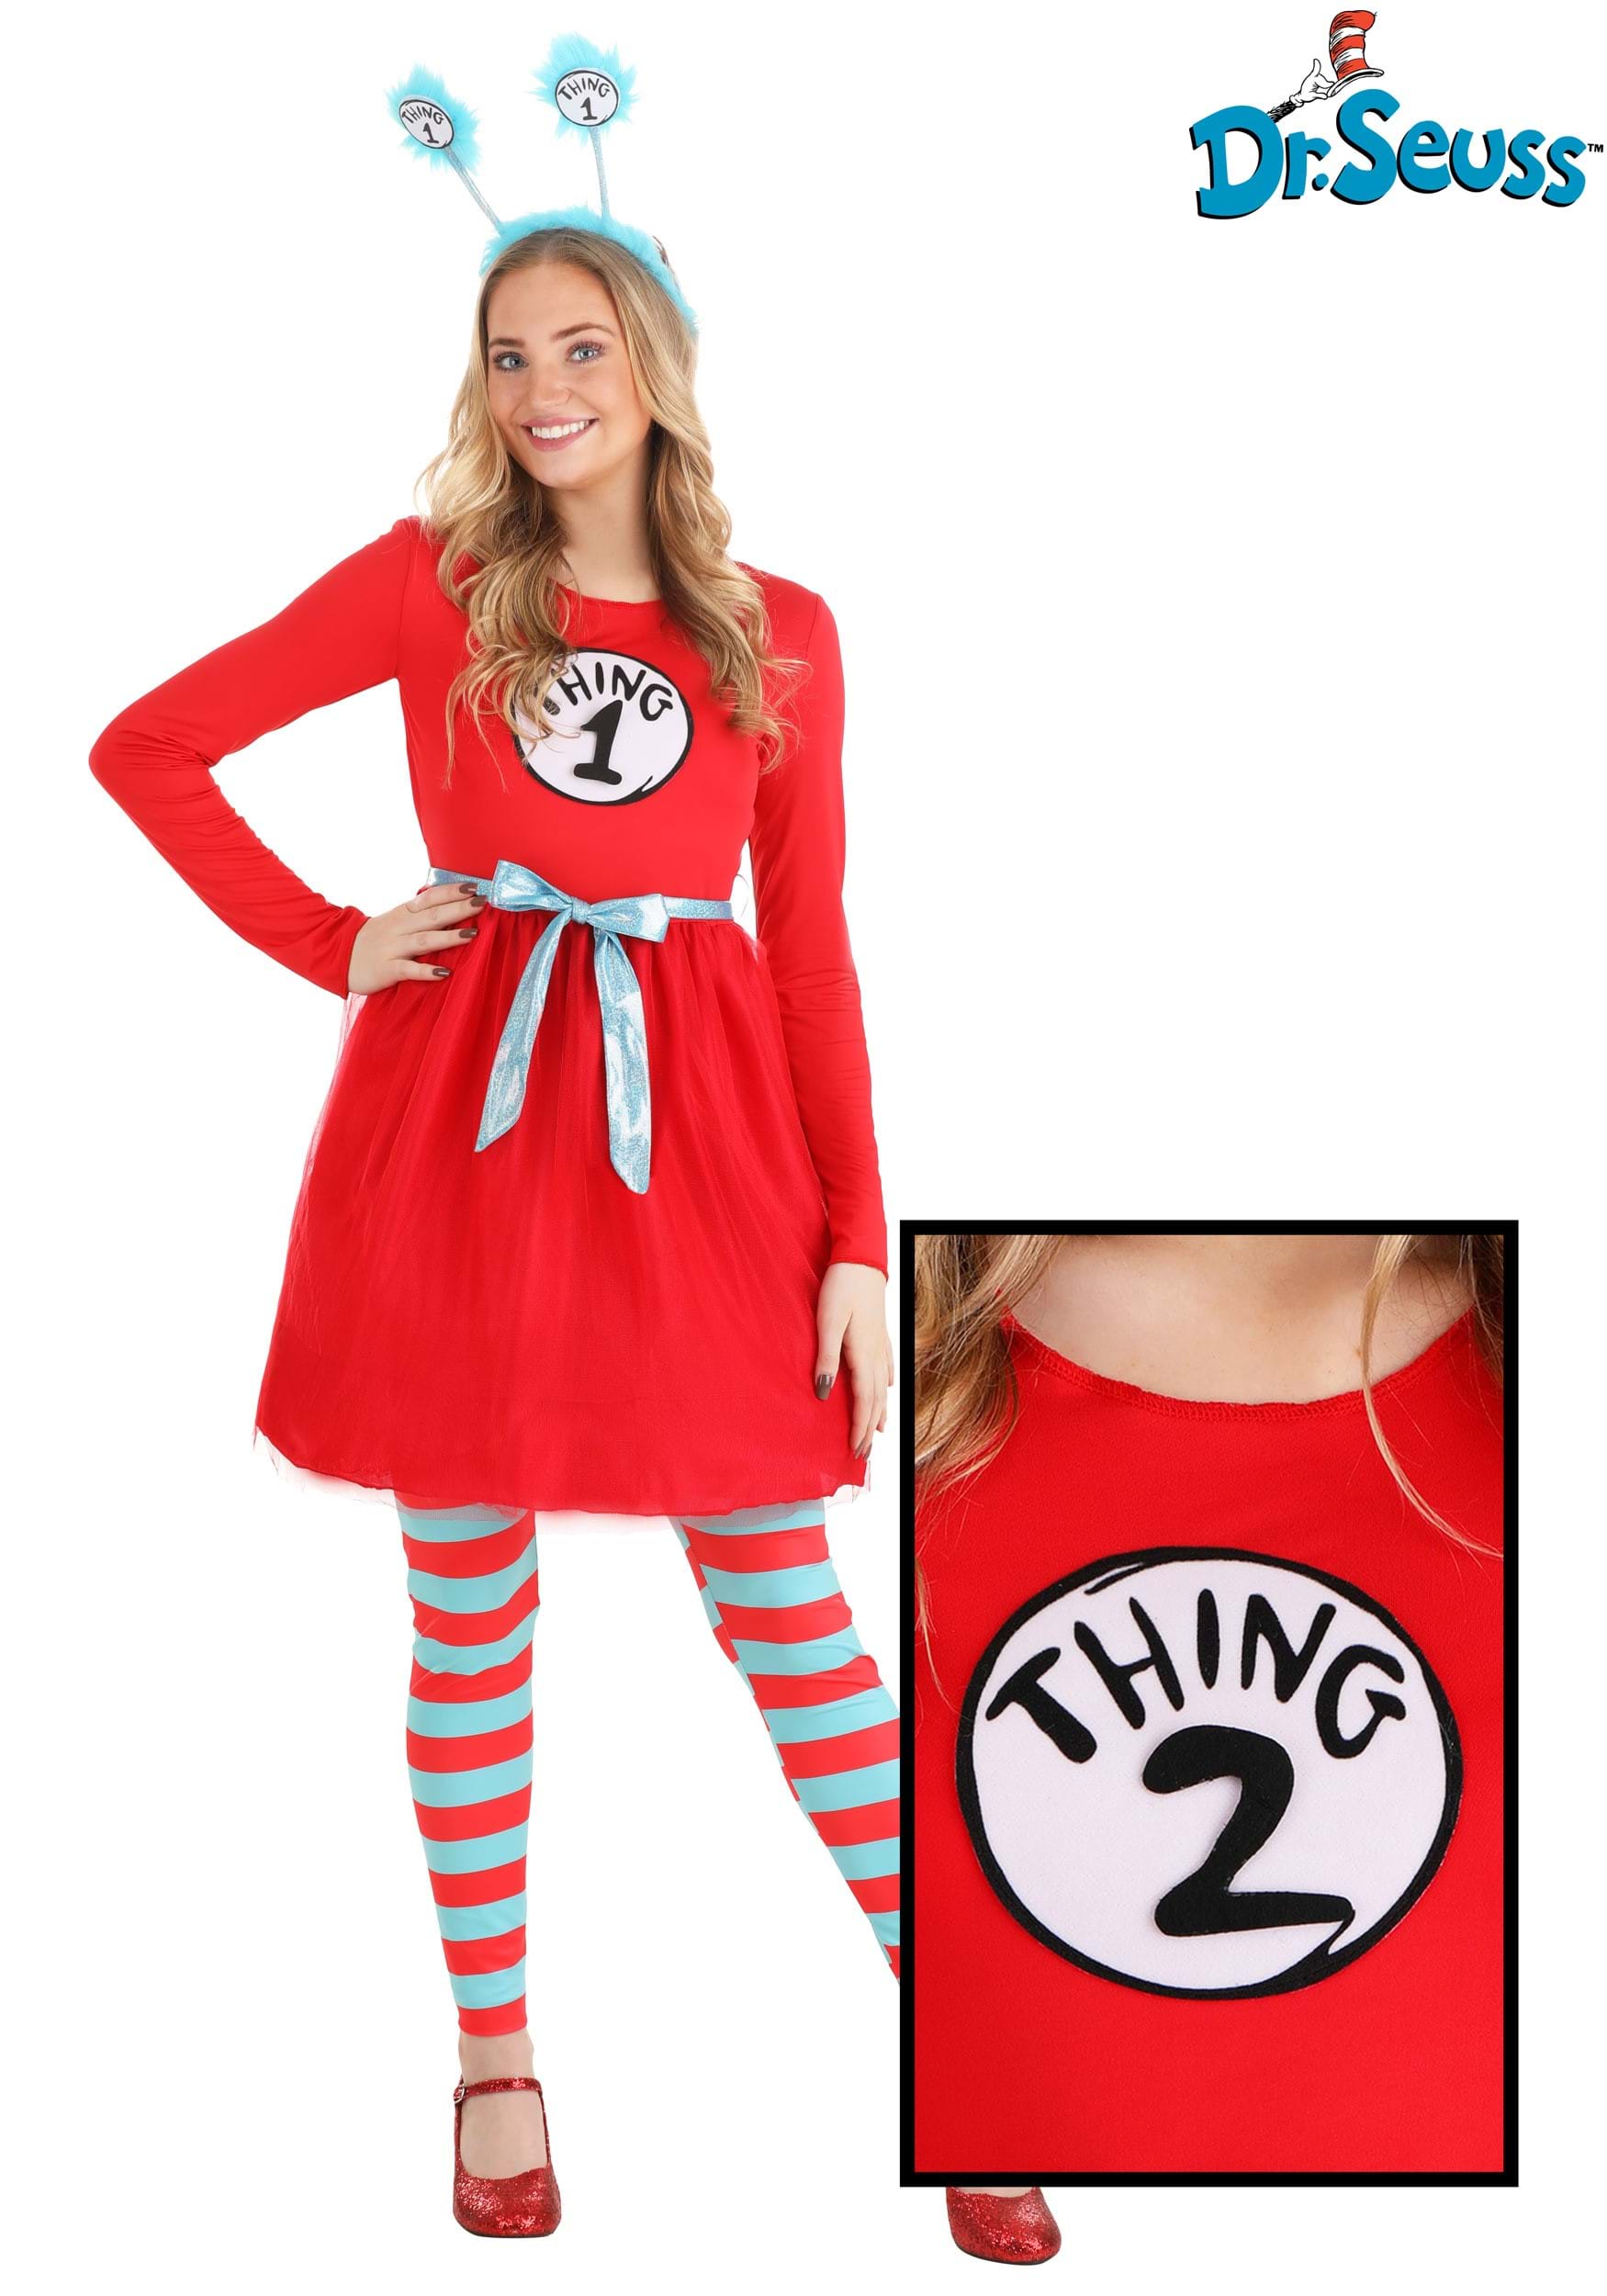 Dr Seuss Dress Up Thing 1 2 Lot Costume Bonus